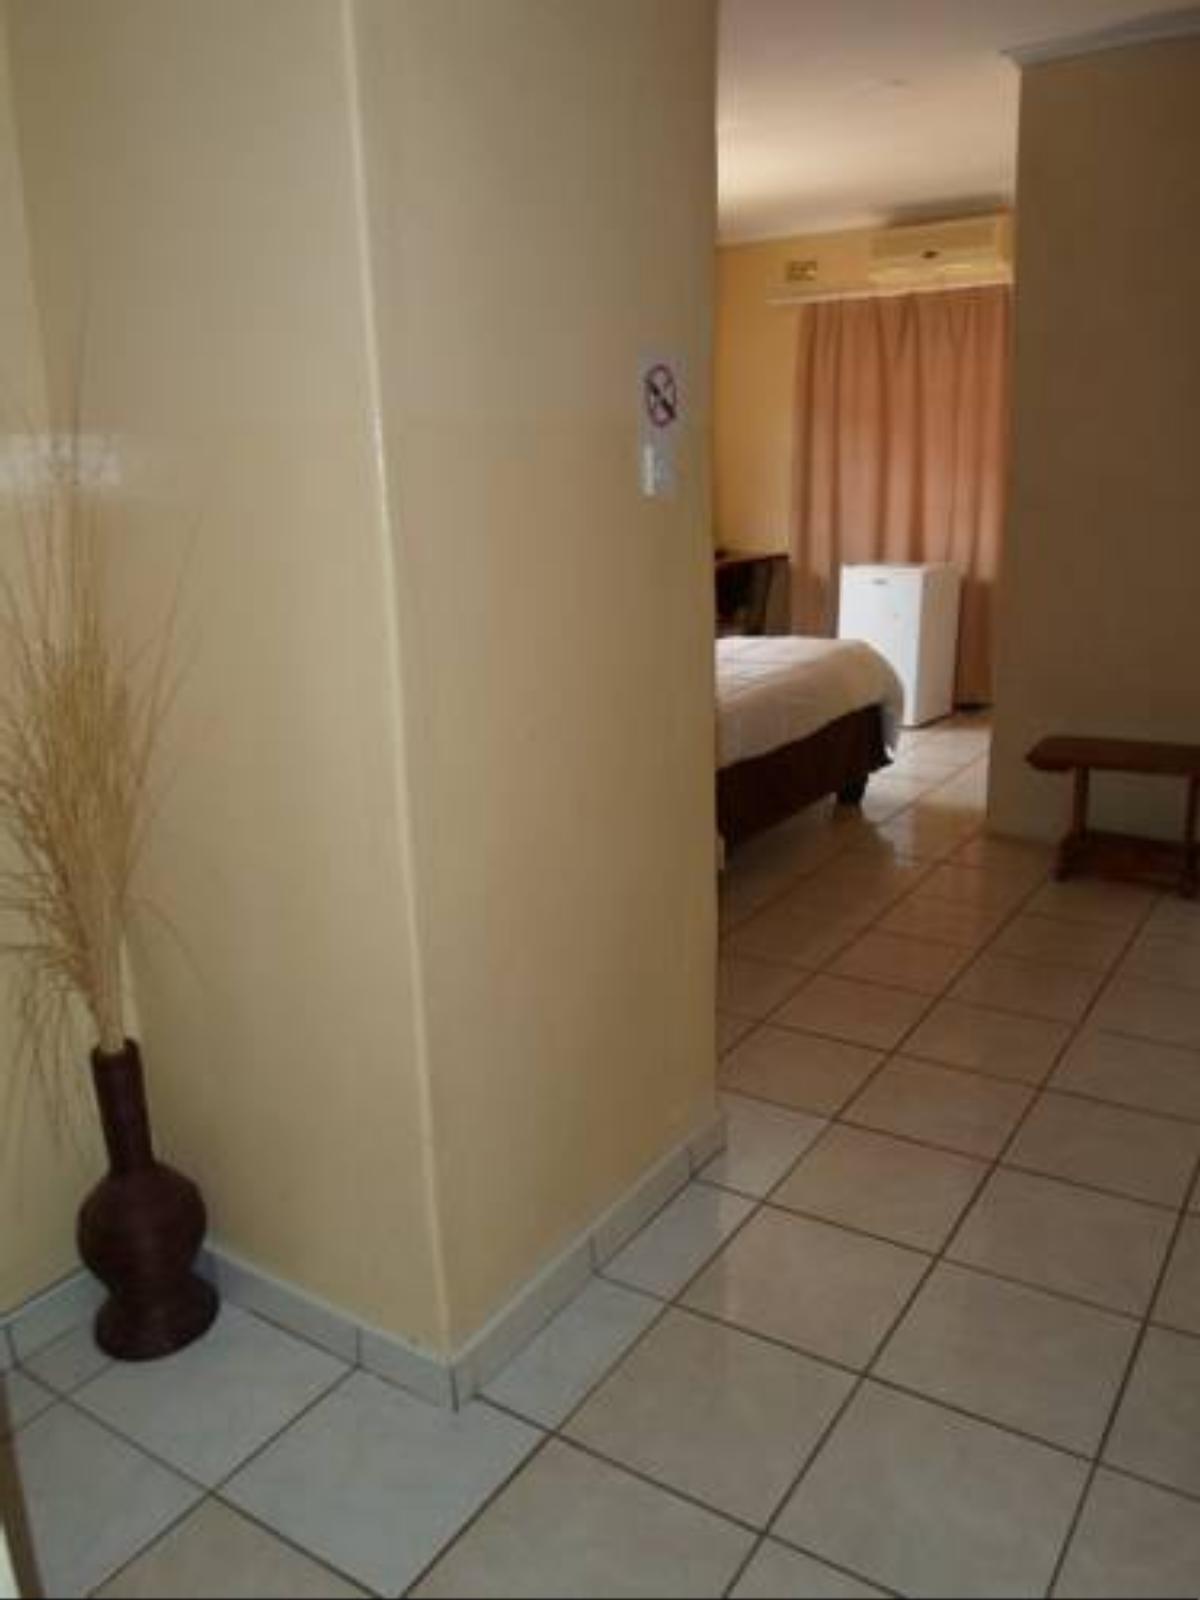 Hardrock Guest House Hotel Francistown Botswana